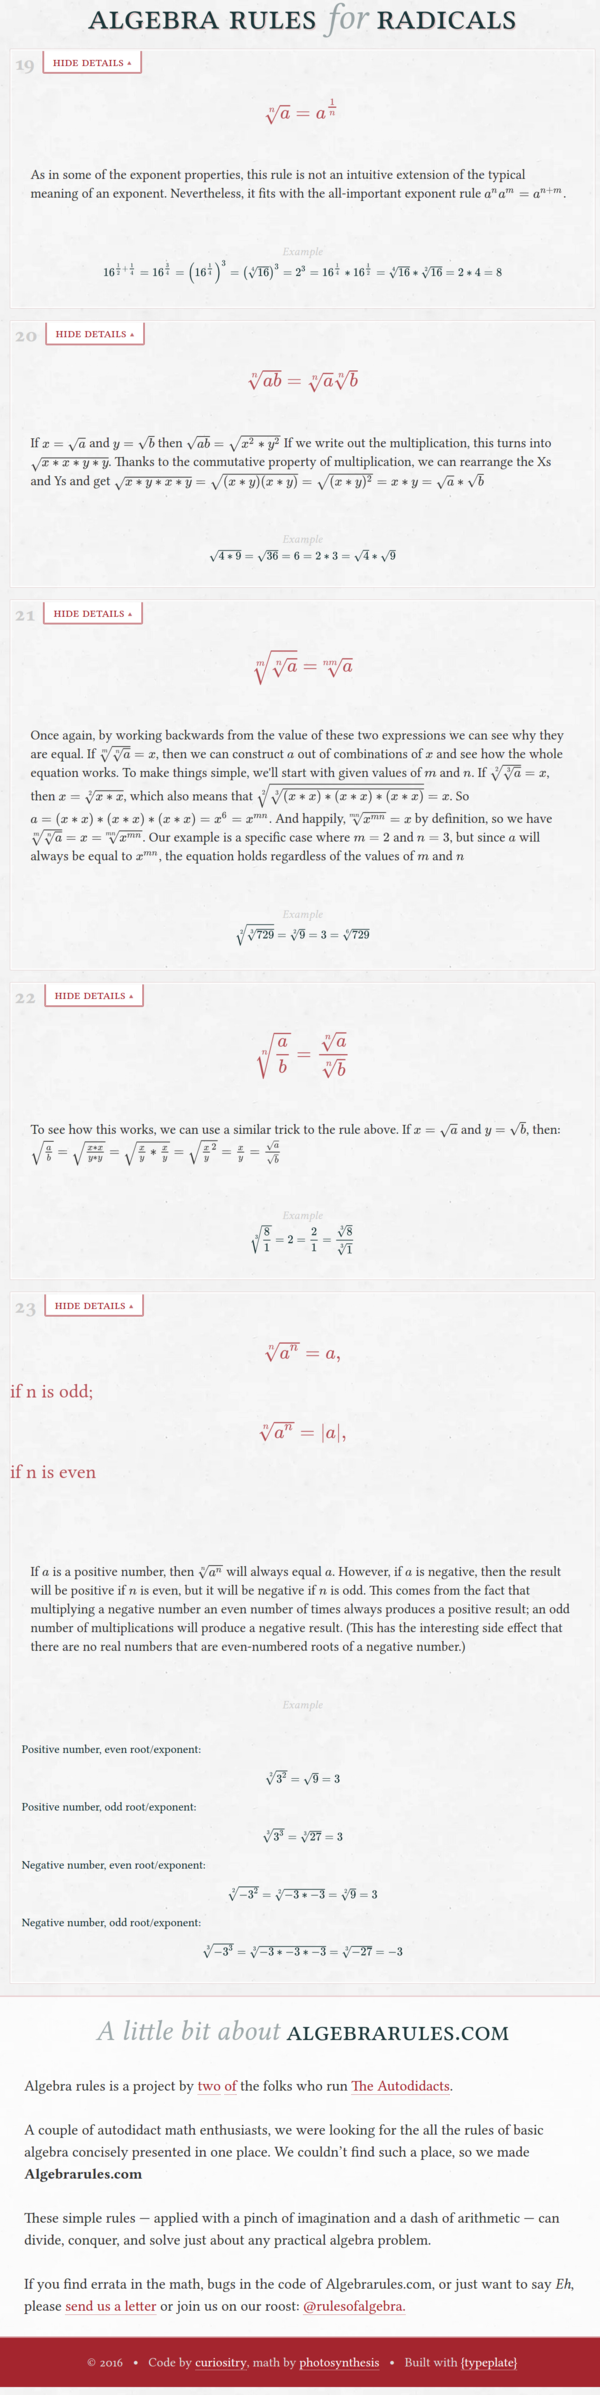 ./20161119-1421-cet-basic-algebra-cheat-sheet-3.png